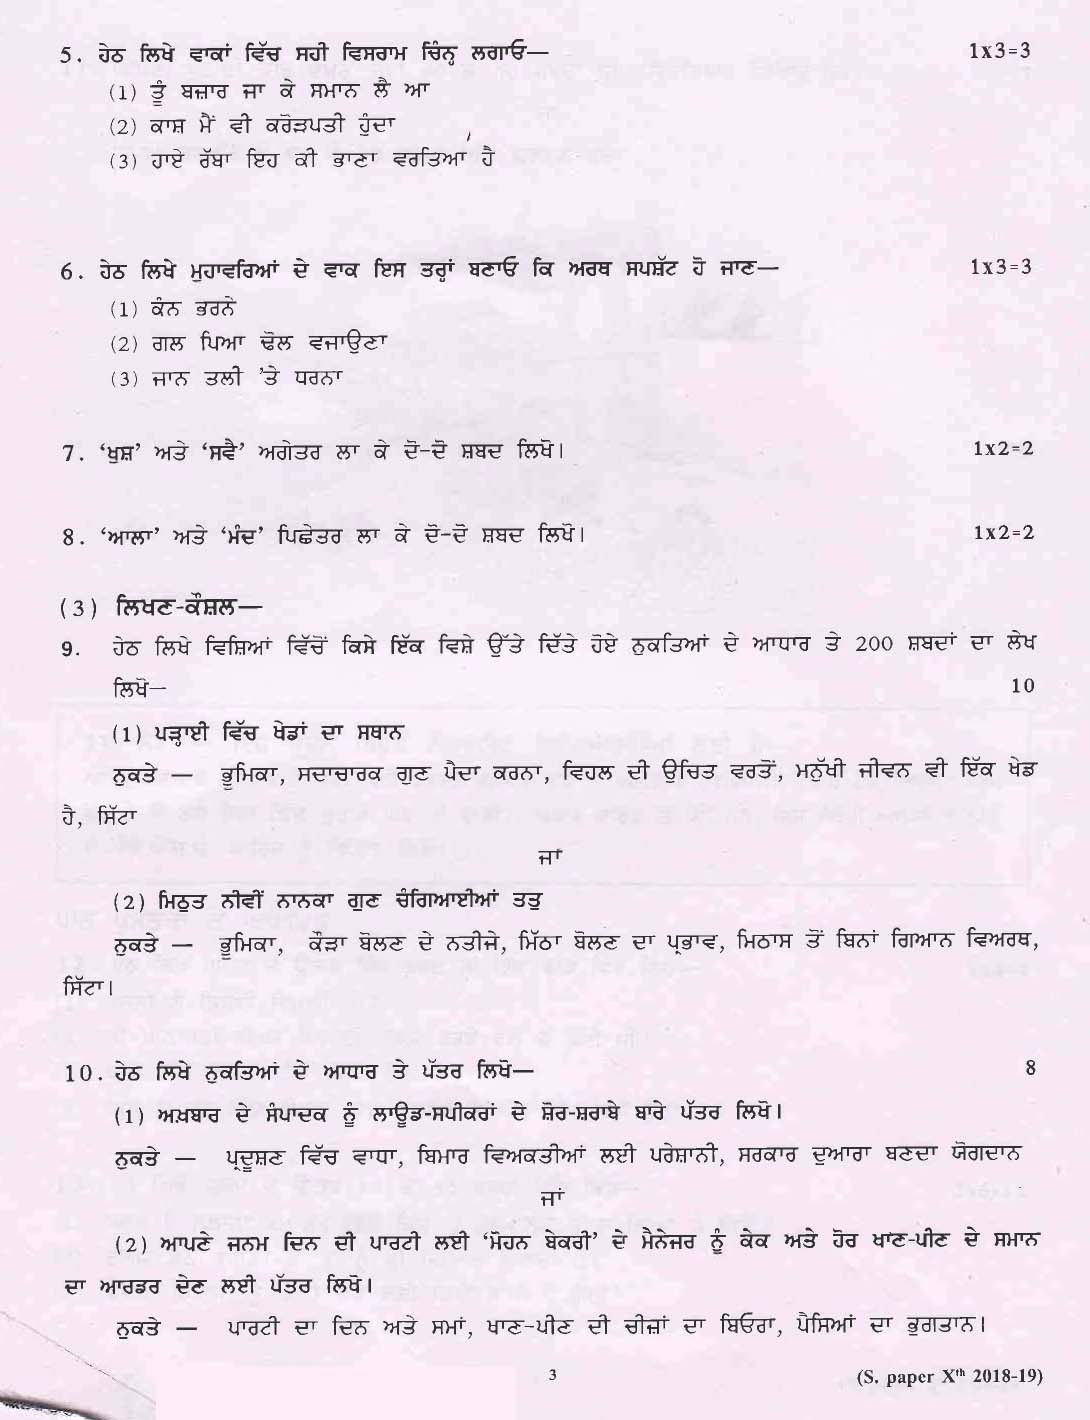 Punjabi CBSE Class X Sample Question Paper 2018-19 - Image 3